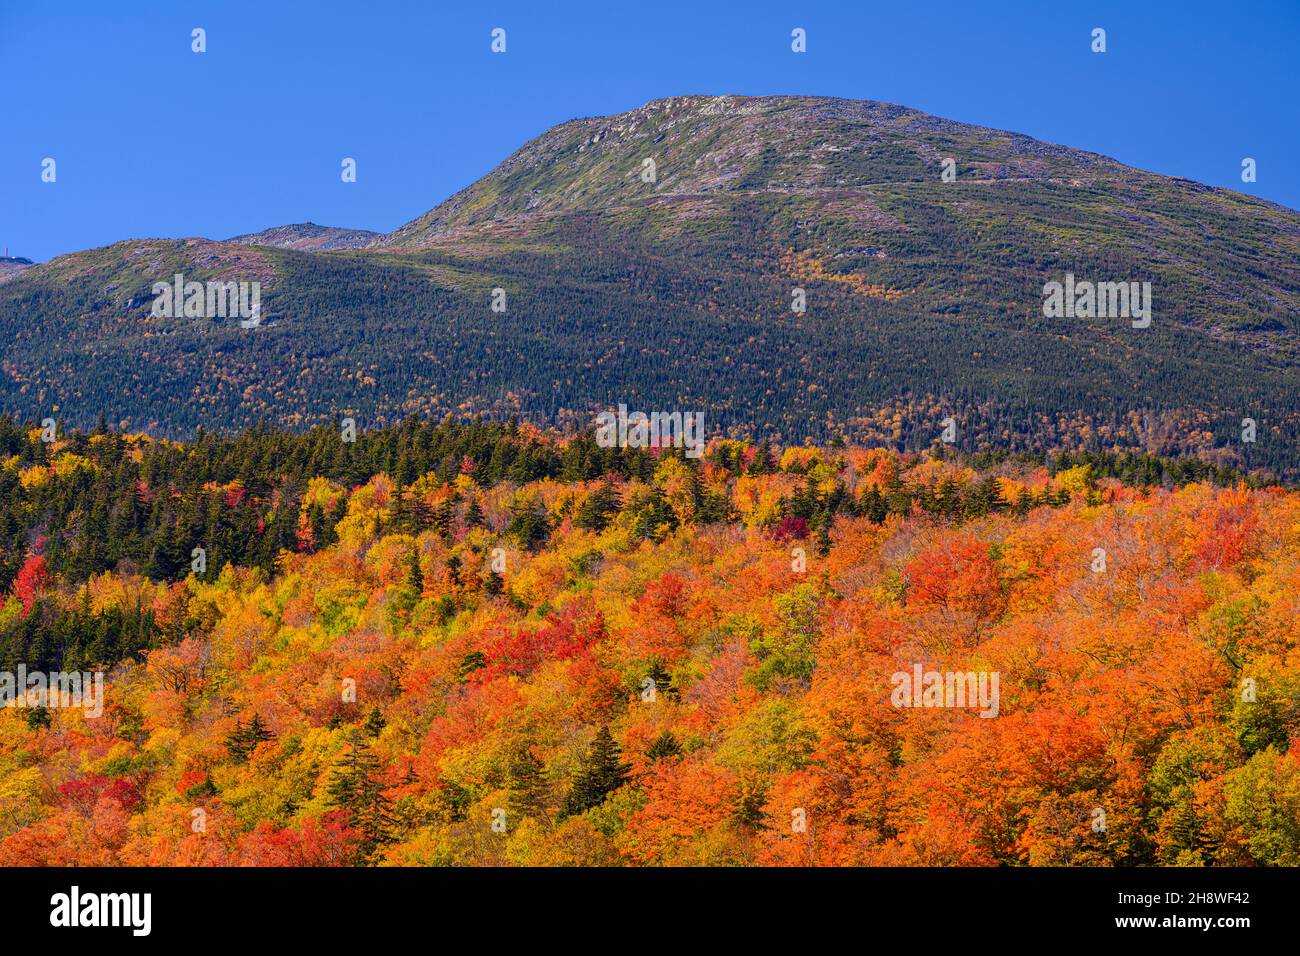 Autumn foliage in the deciduous forest on New England hillsides, Mount Washington, Pinkham Notch, New Hampshire, USA Stock Photo